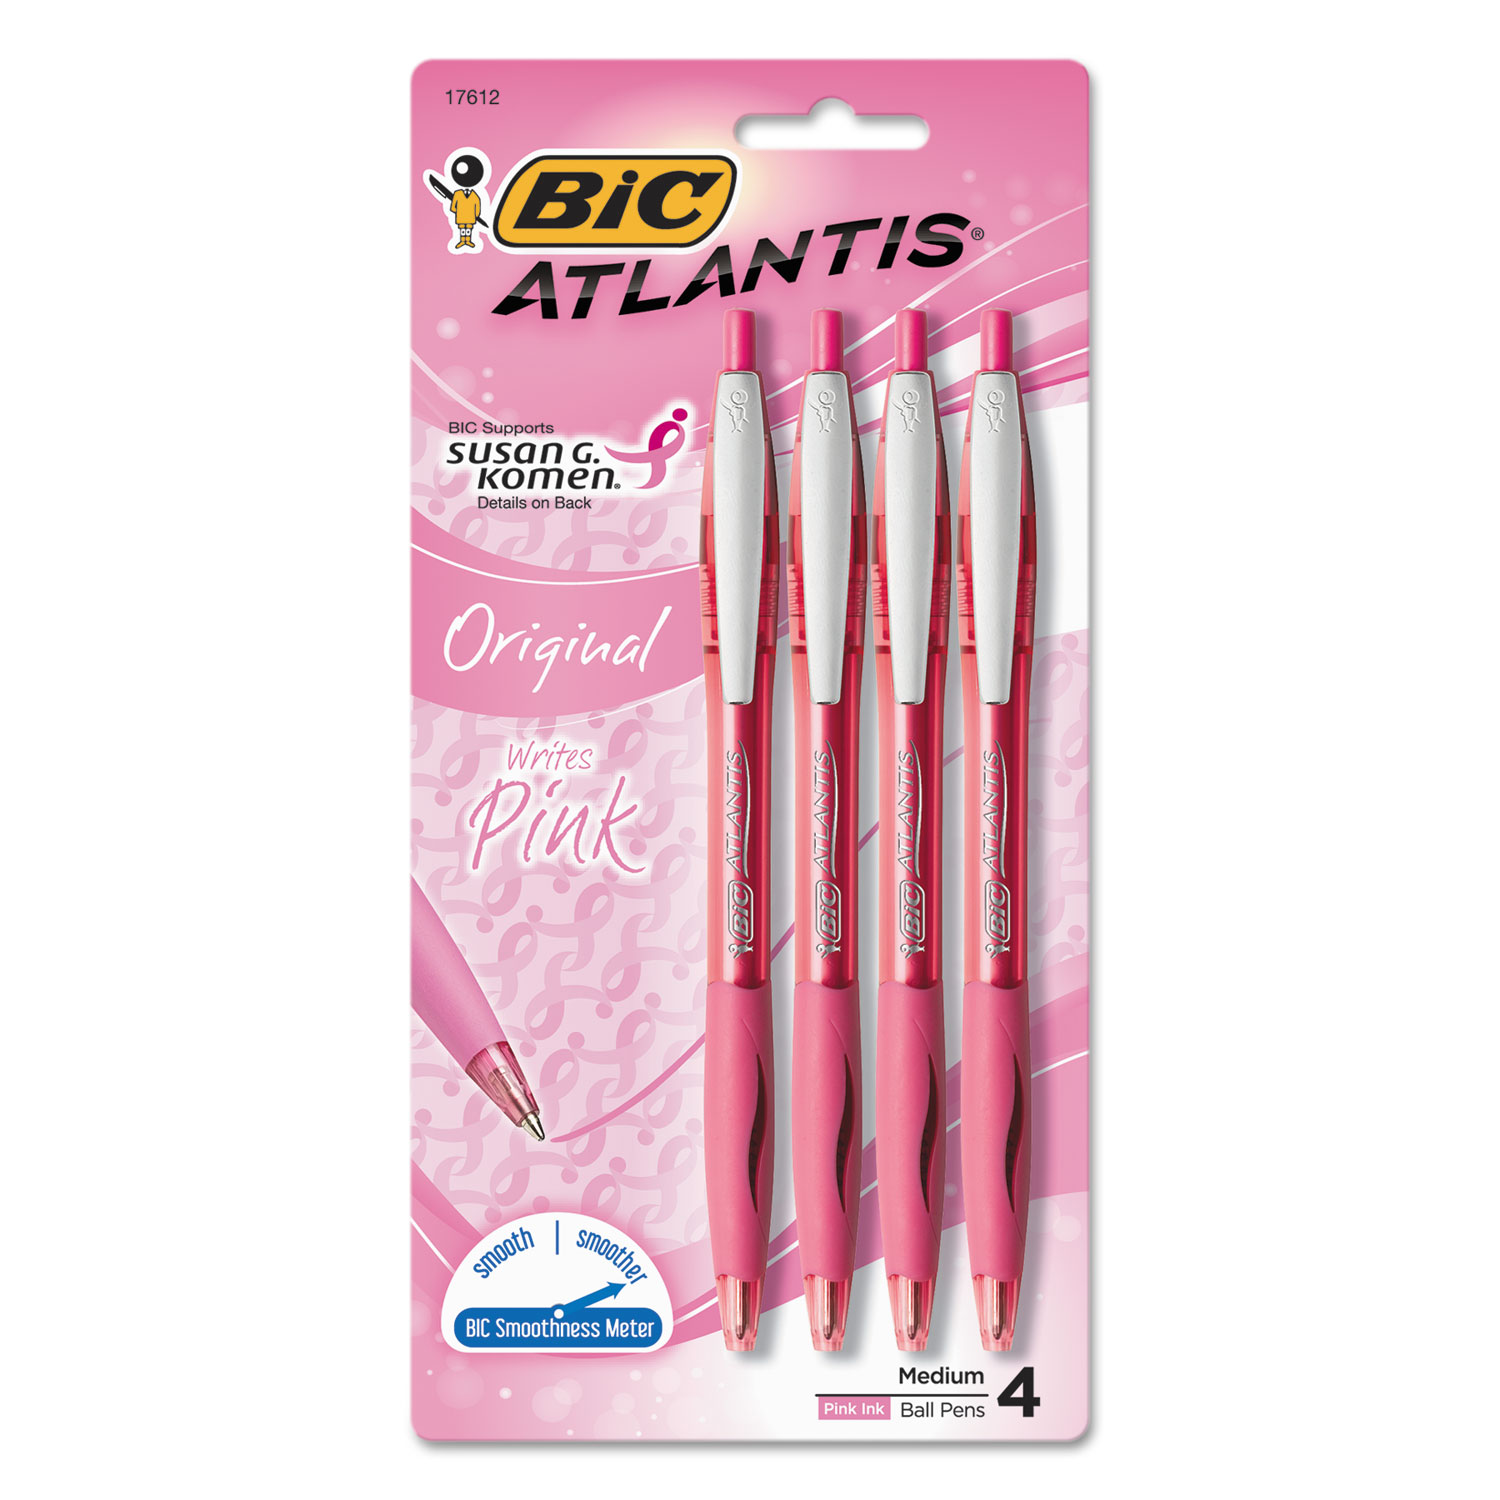 Atlantis Original Retractable Ballpoint Pen, Pink Ink, Medium, 1mm, 4/Pack